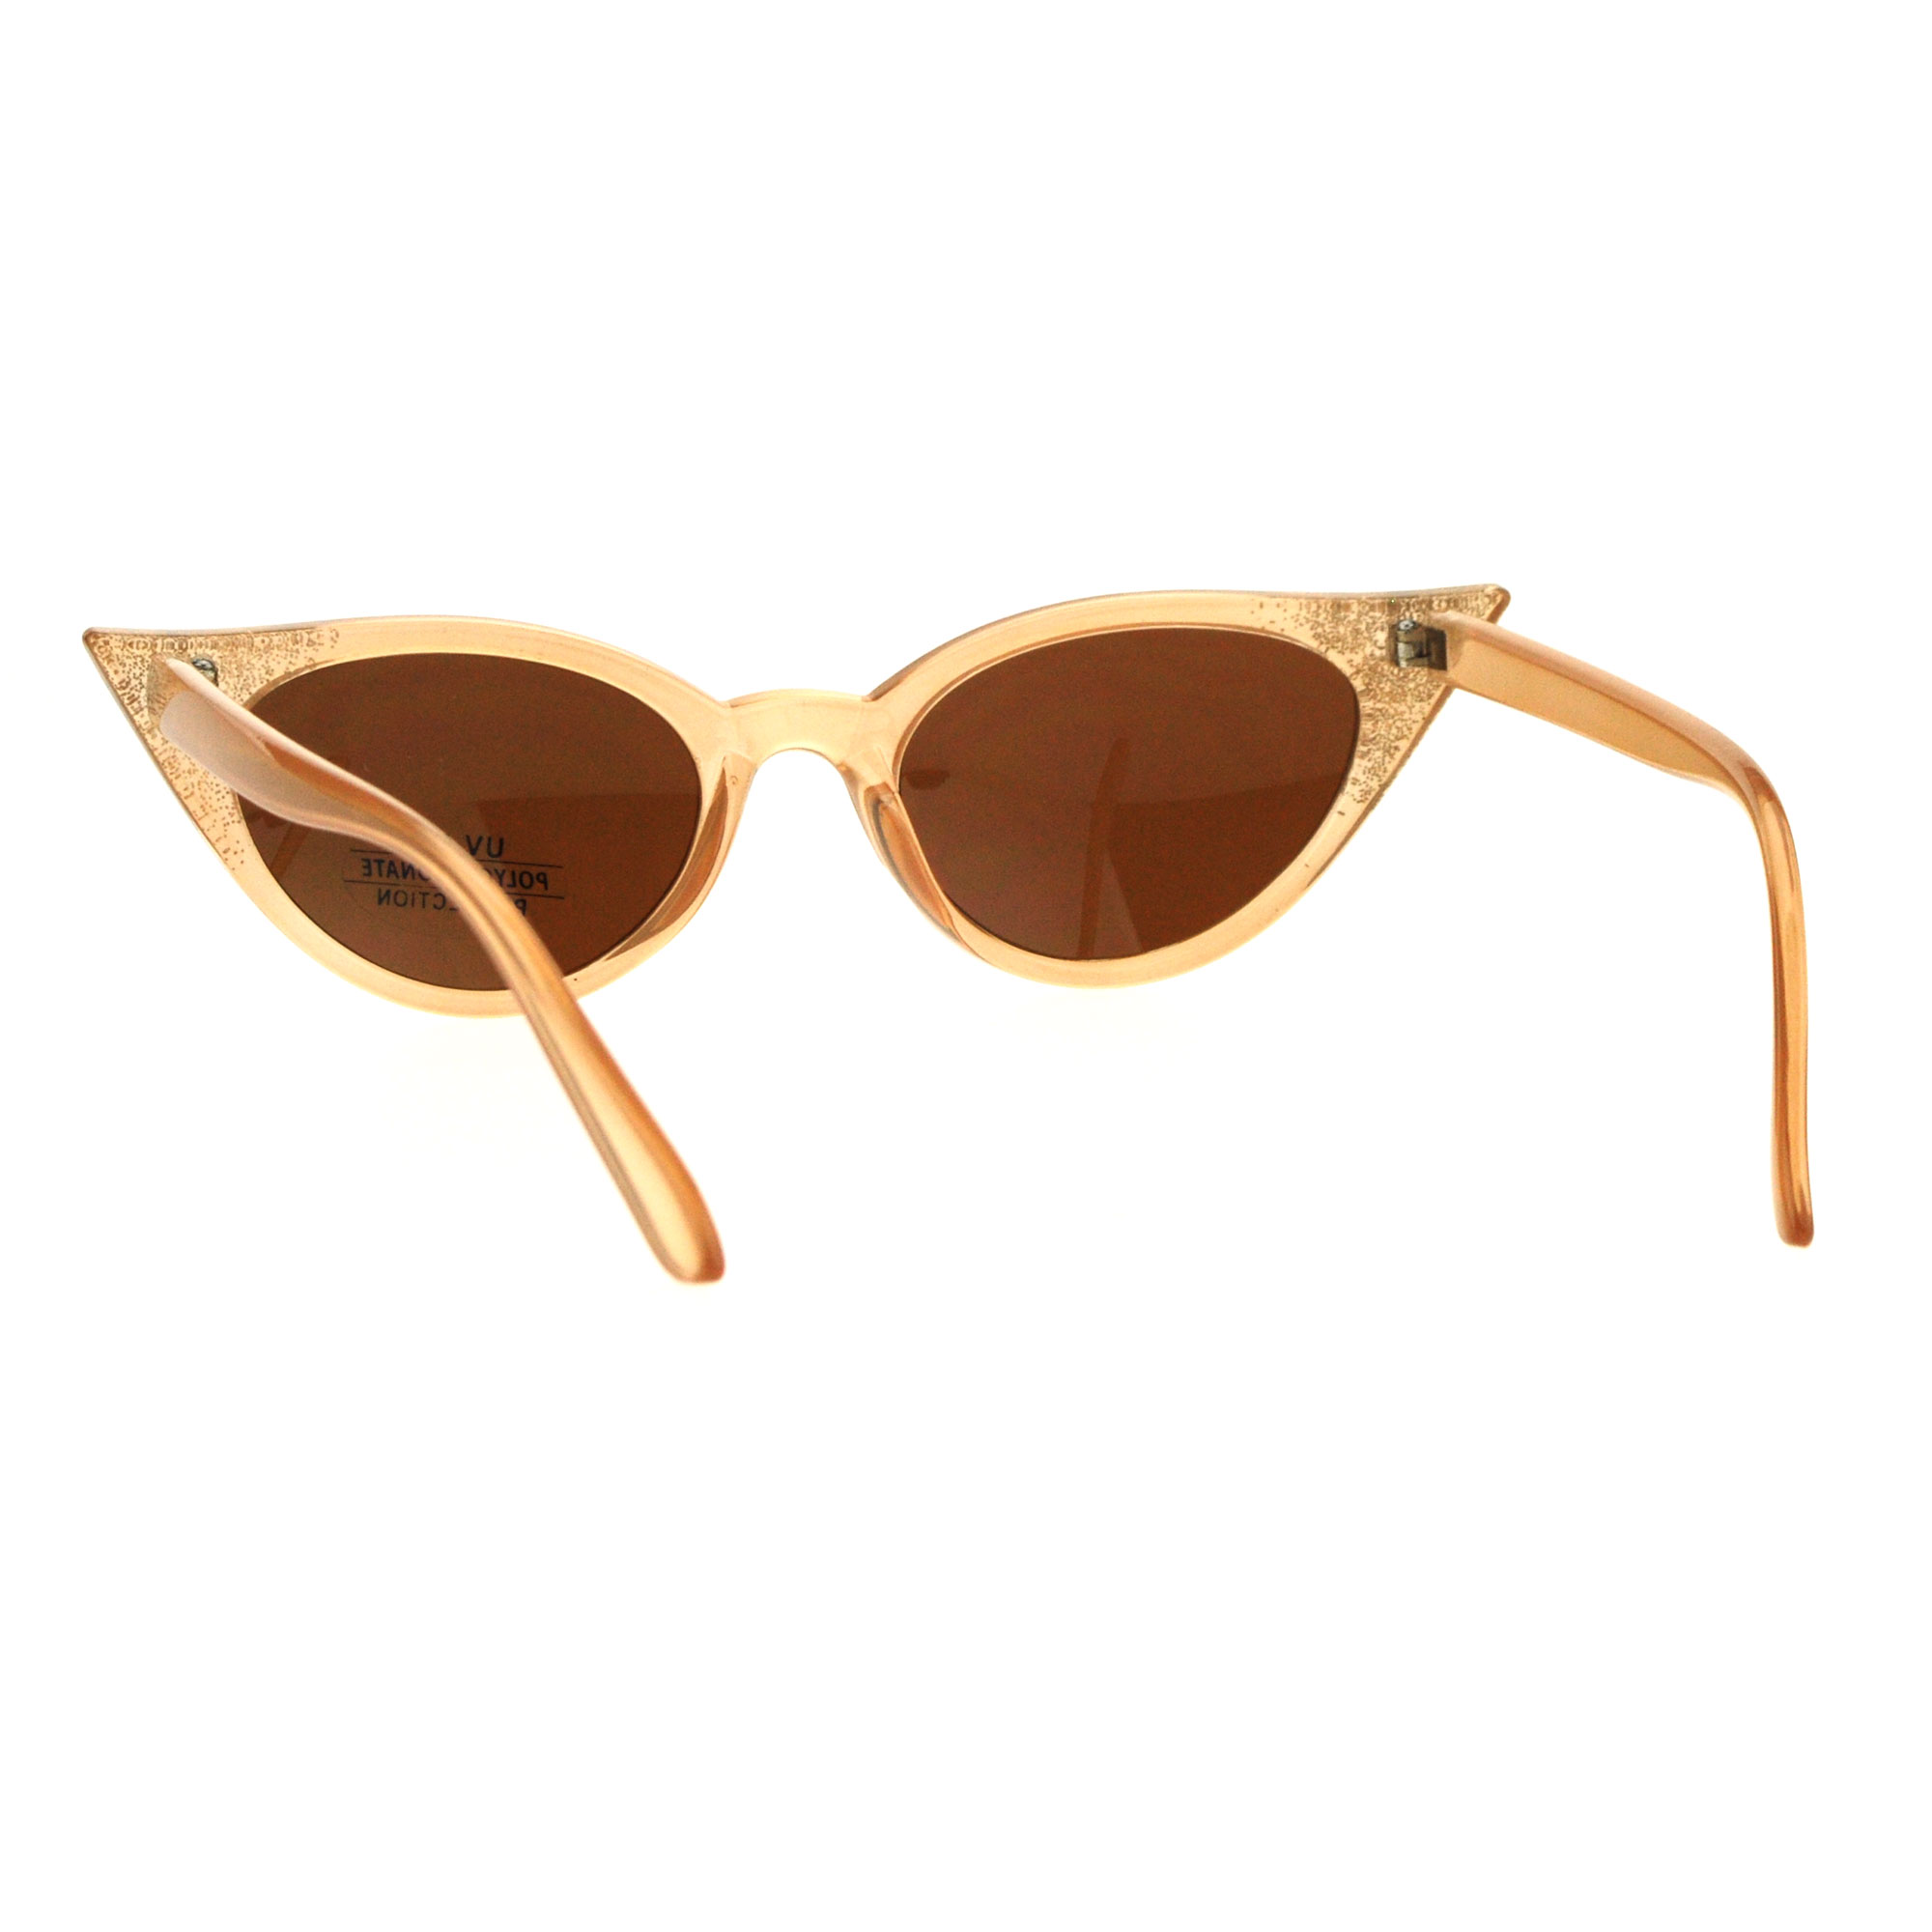 Womens Retro Vintage Style Glam Narrow Cat Eye Sunglasses | eBay